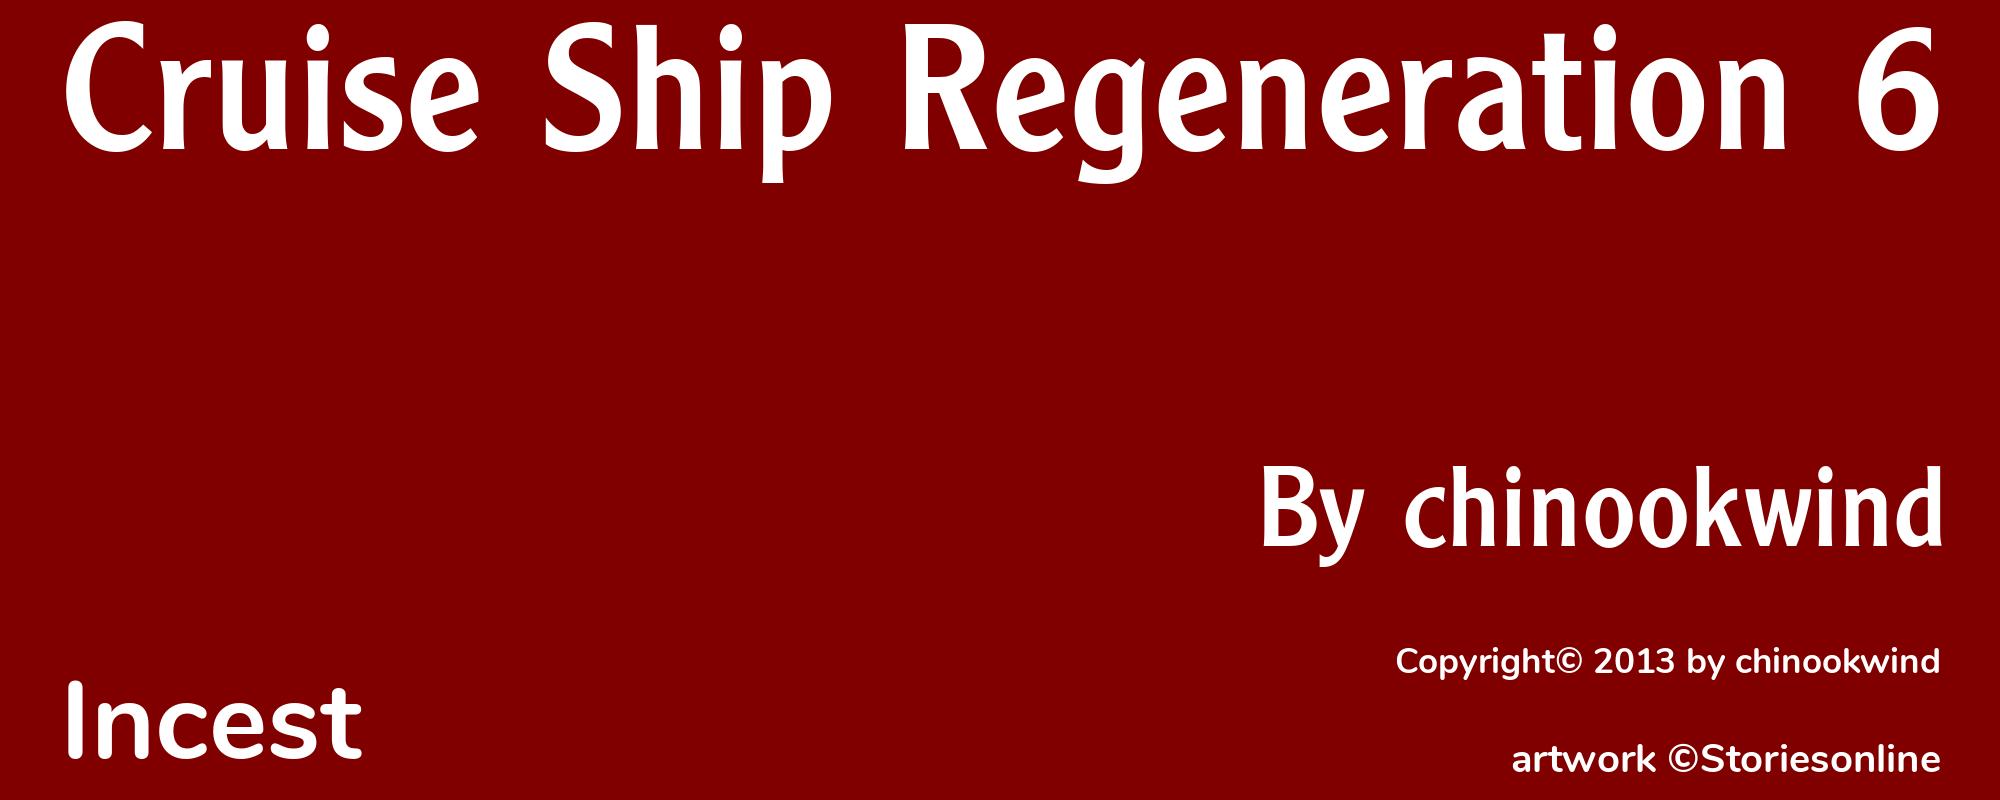 Cruise Ship Regeneration 6 - Cover